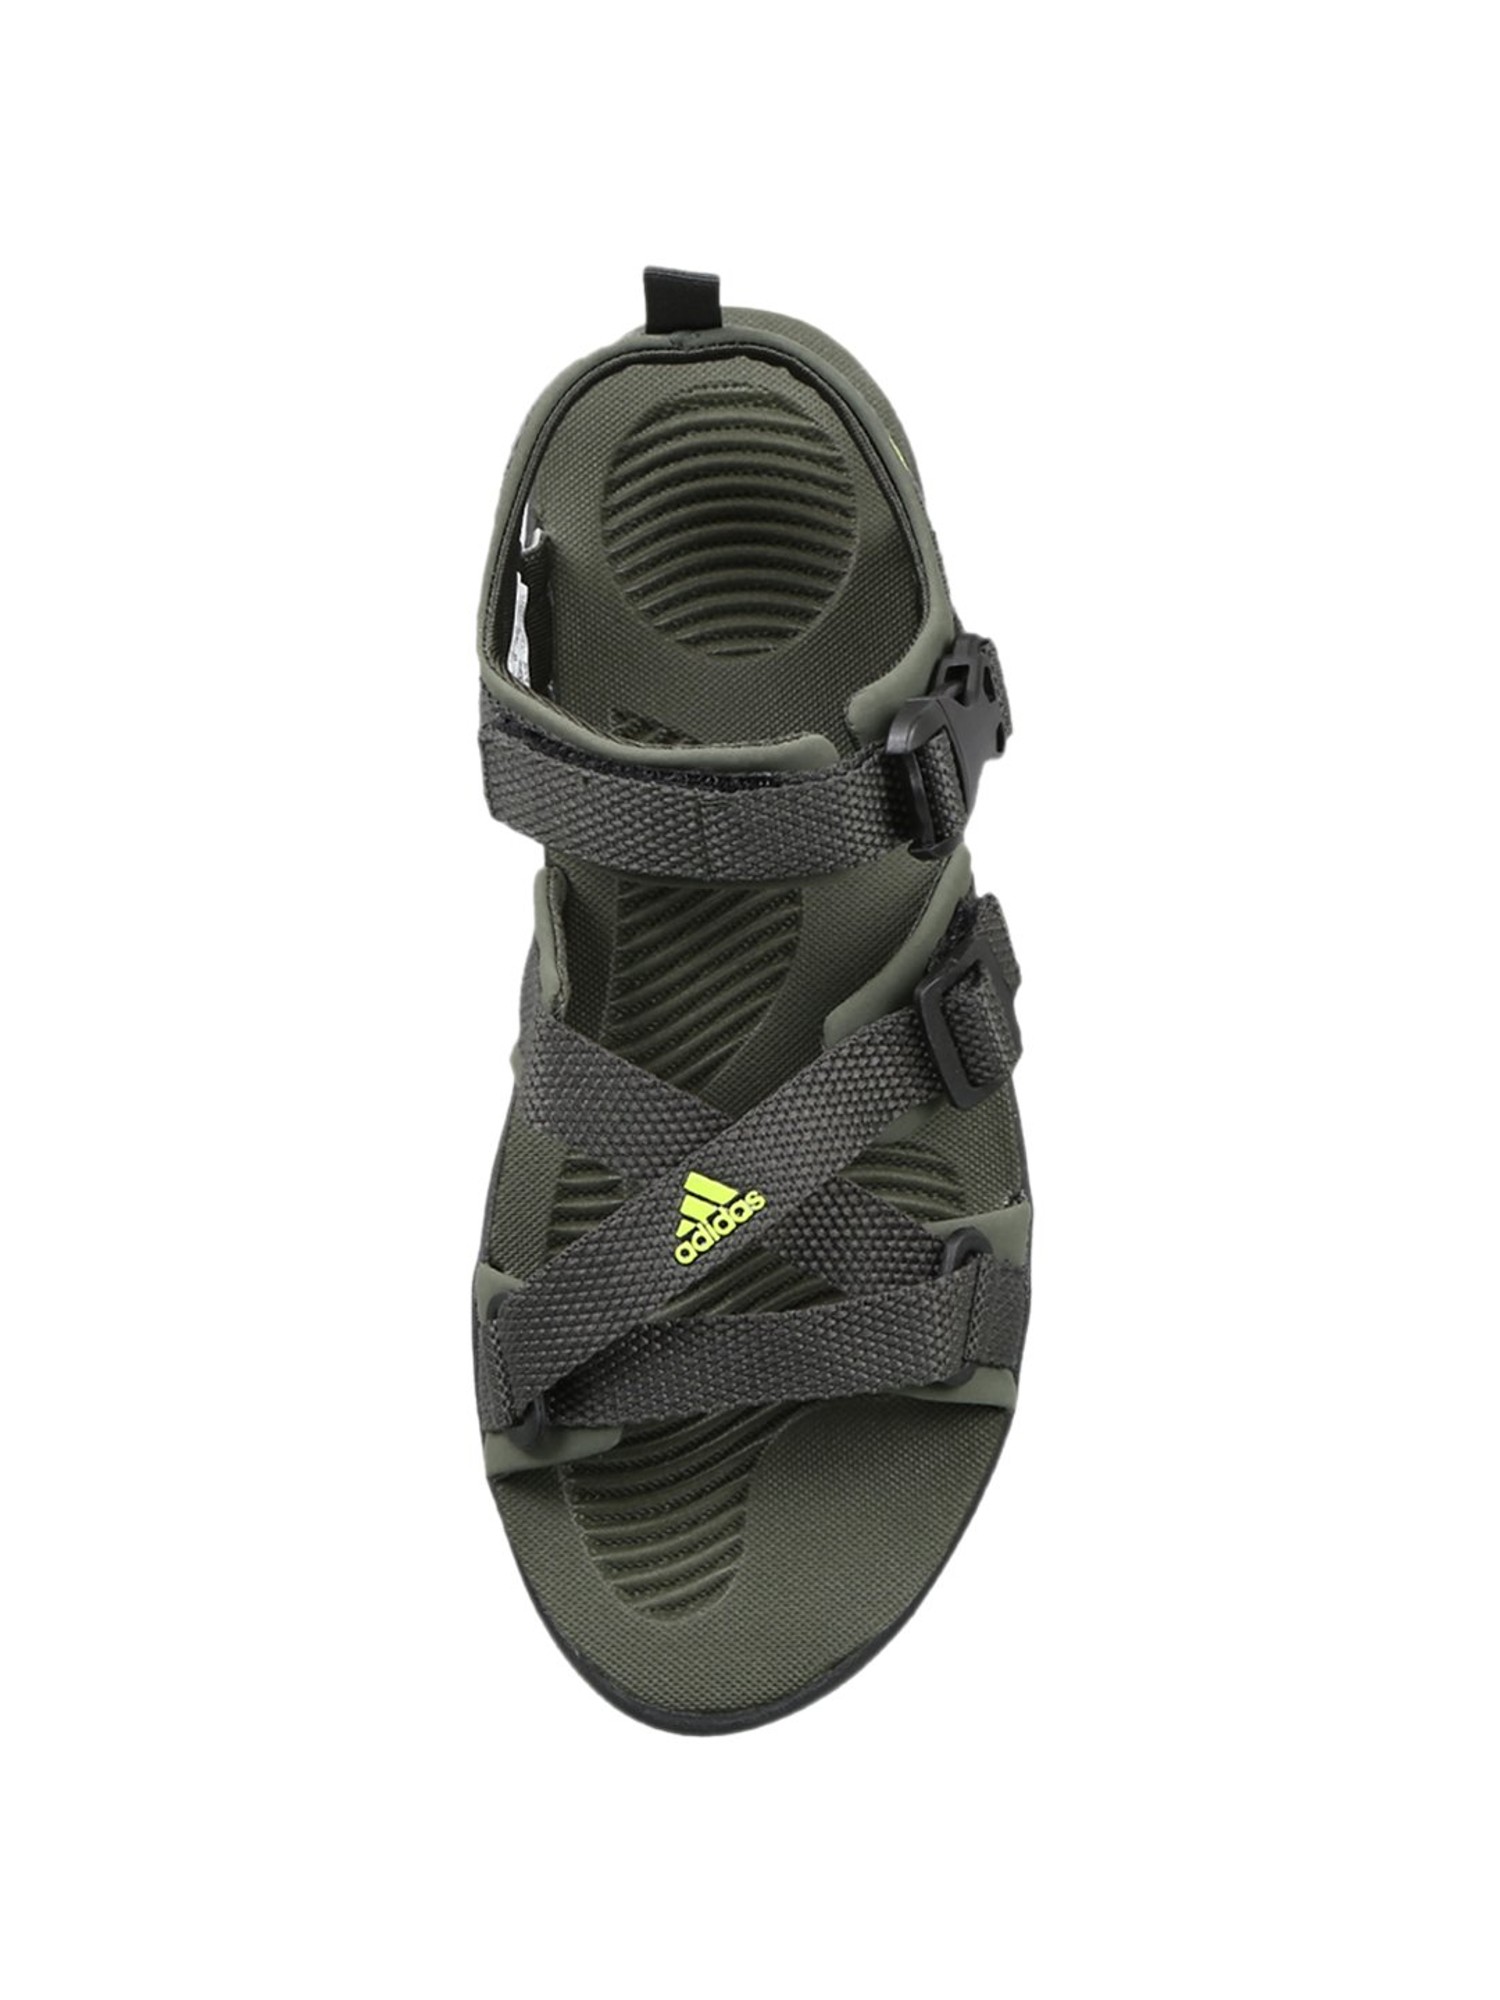 adidas gladi 2.0 olive floater sandals